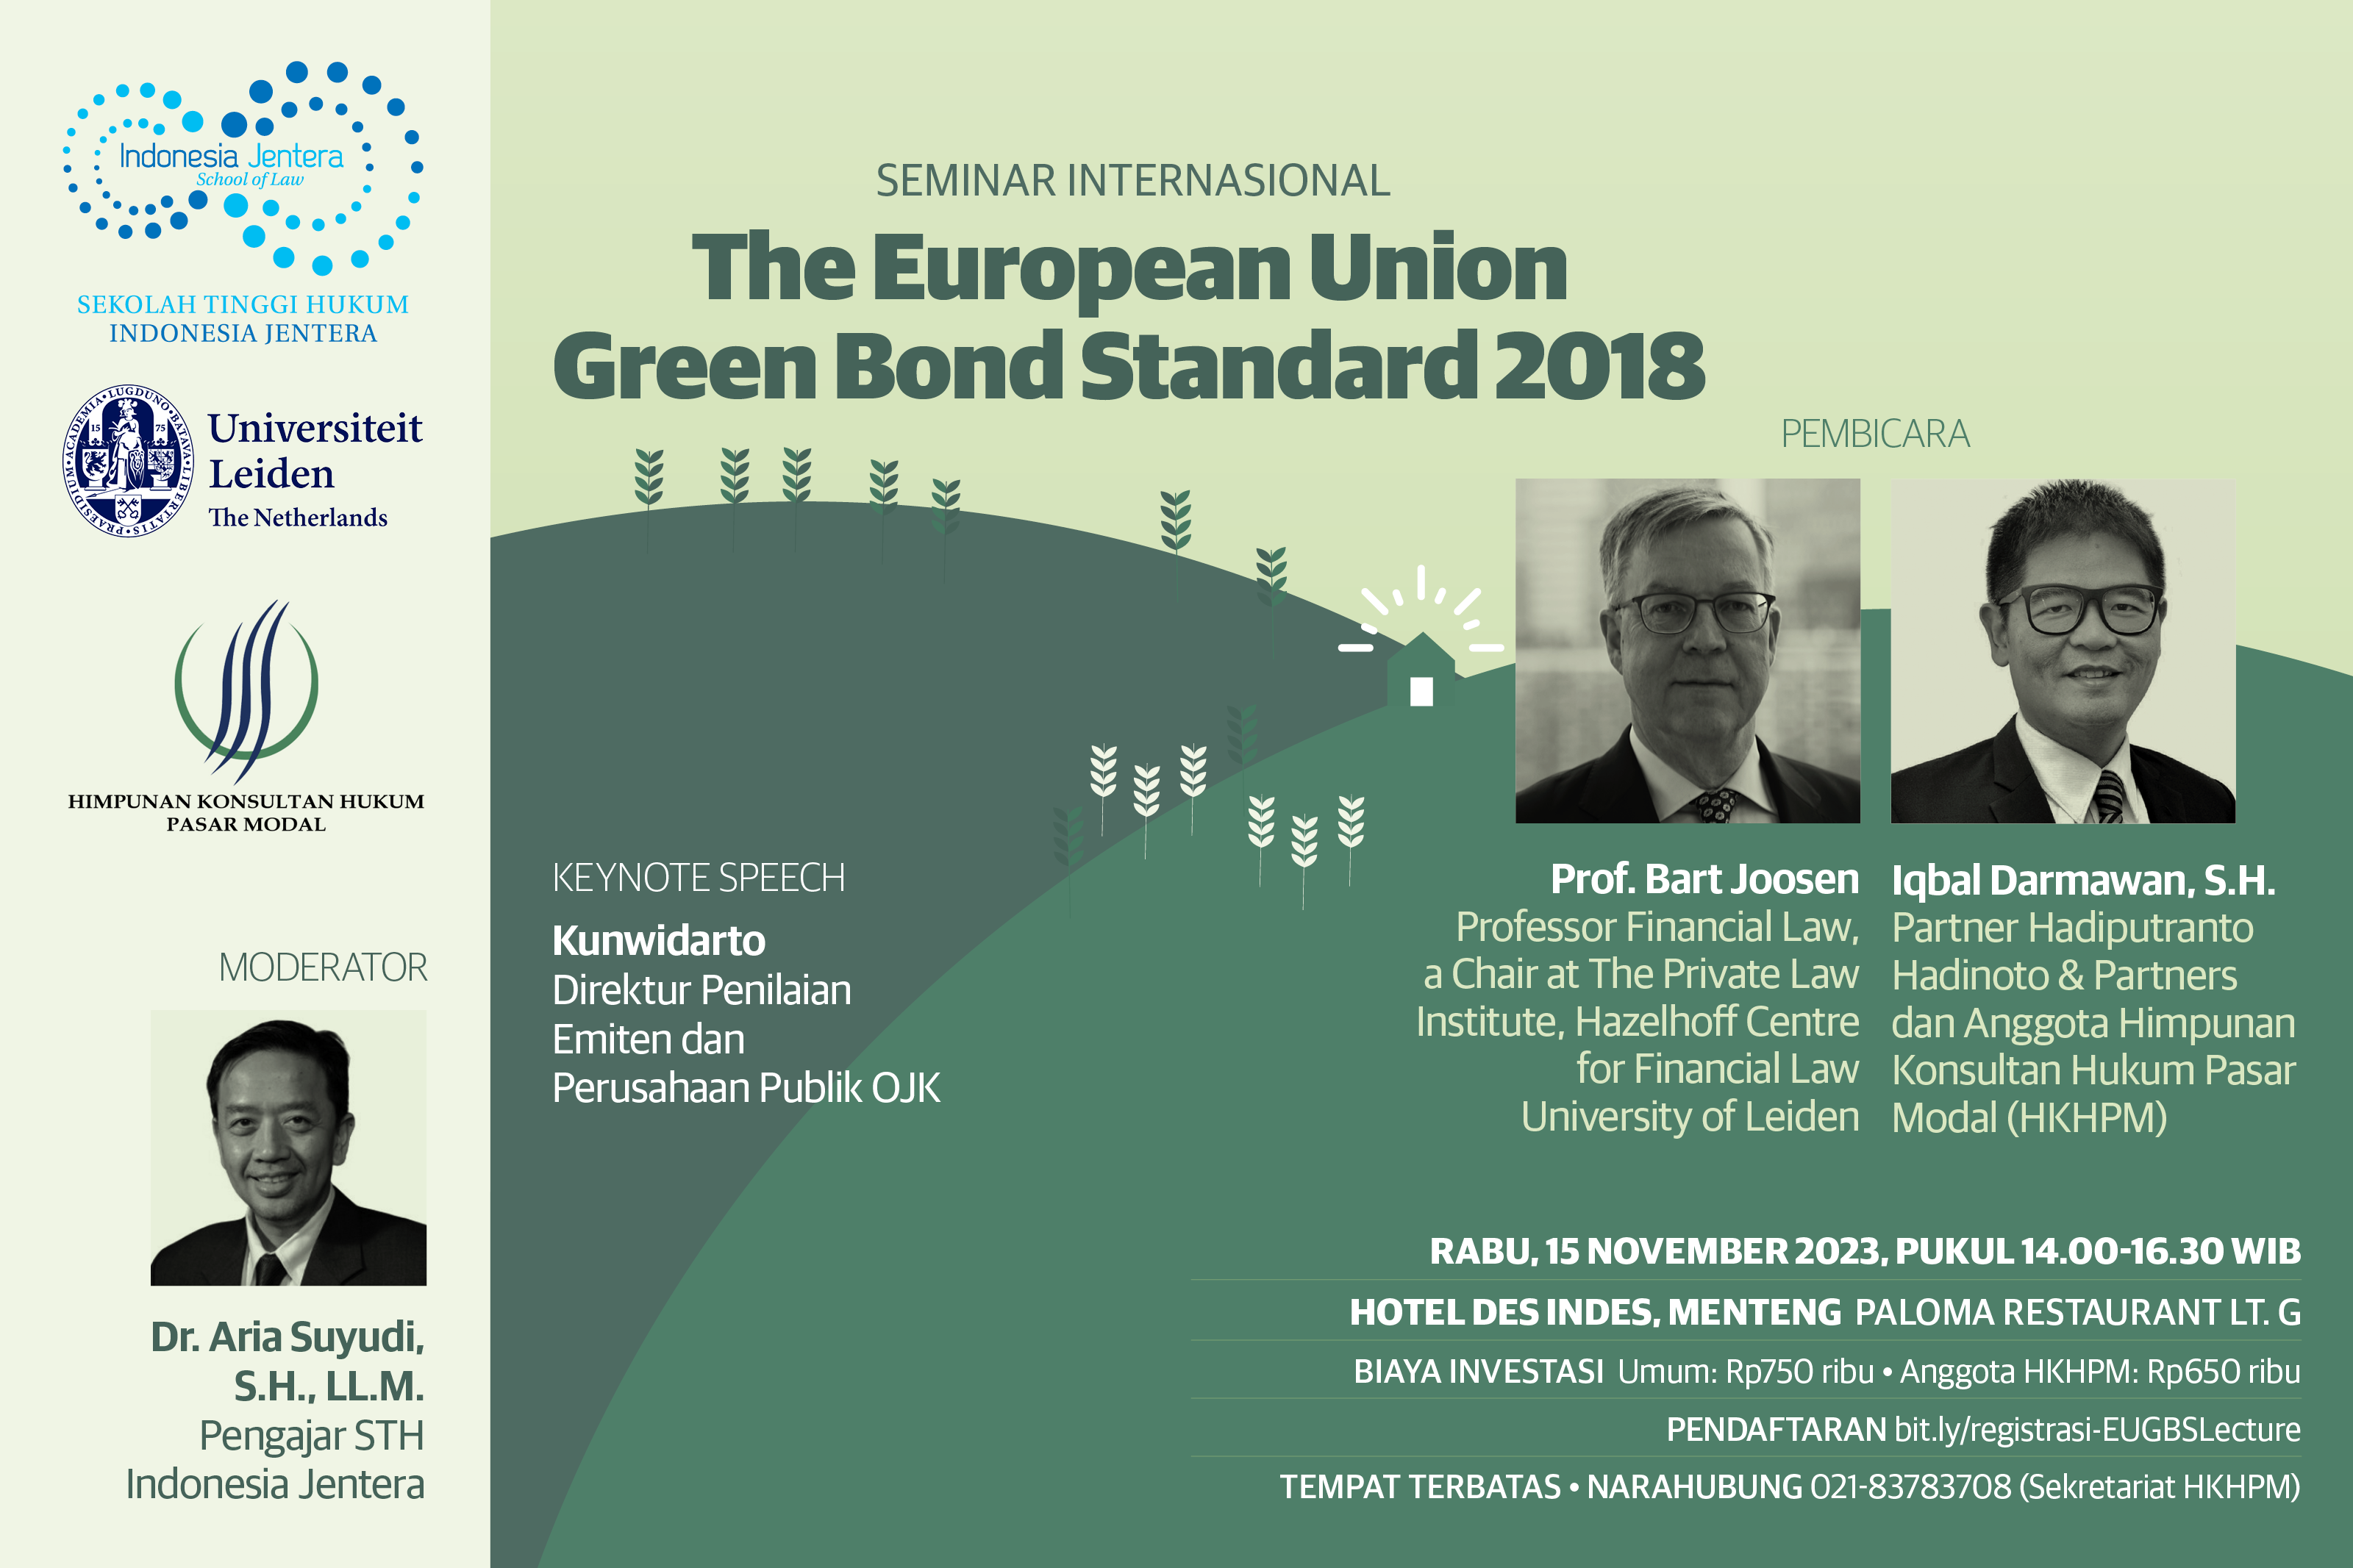 Seminar Internasional The European Union Green Bond Standard 2018